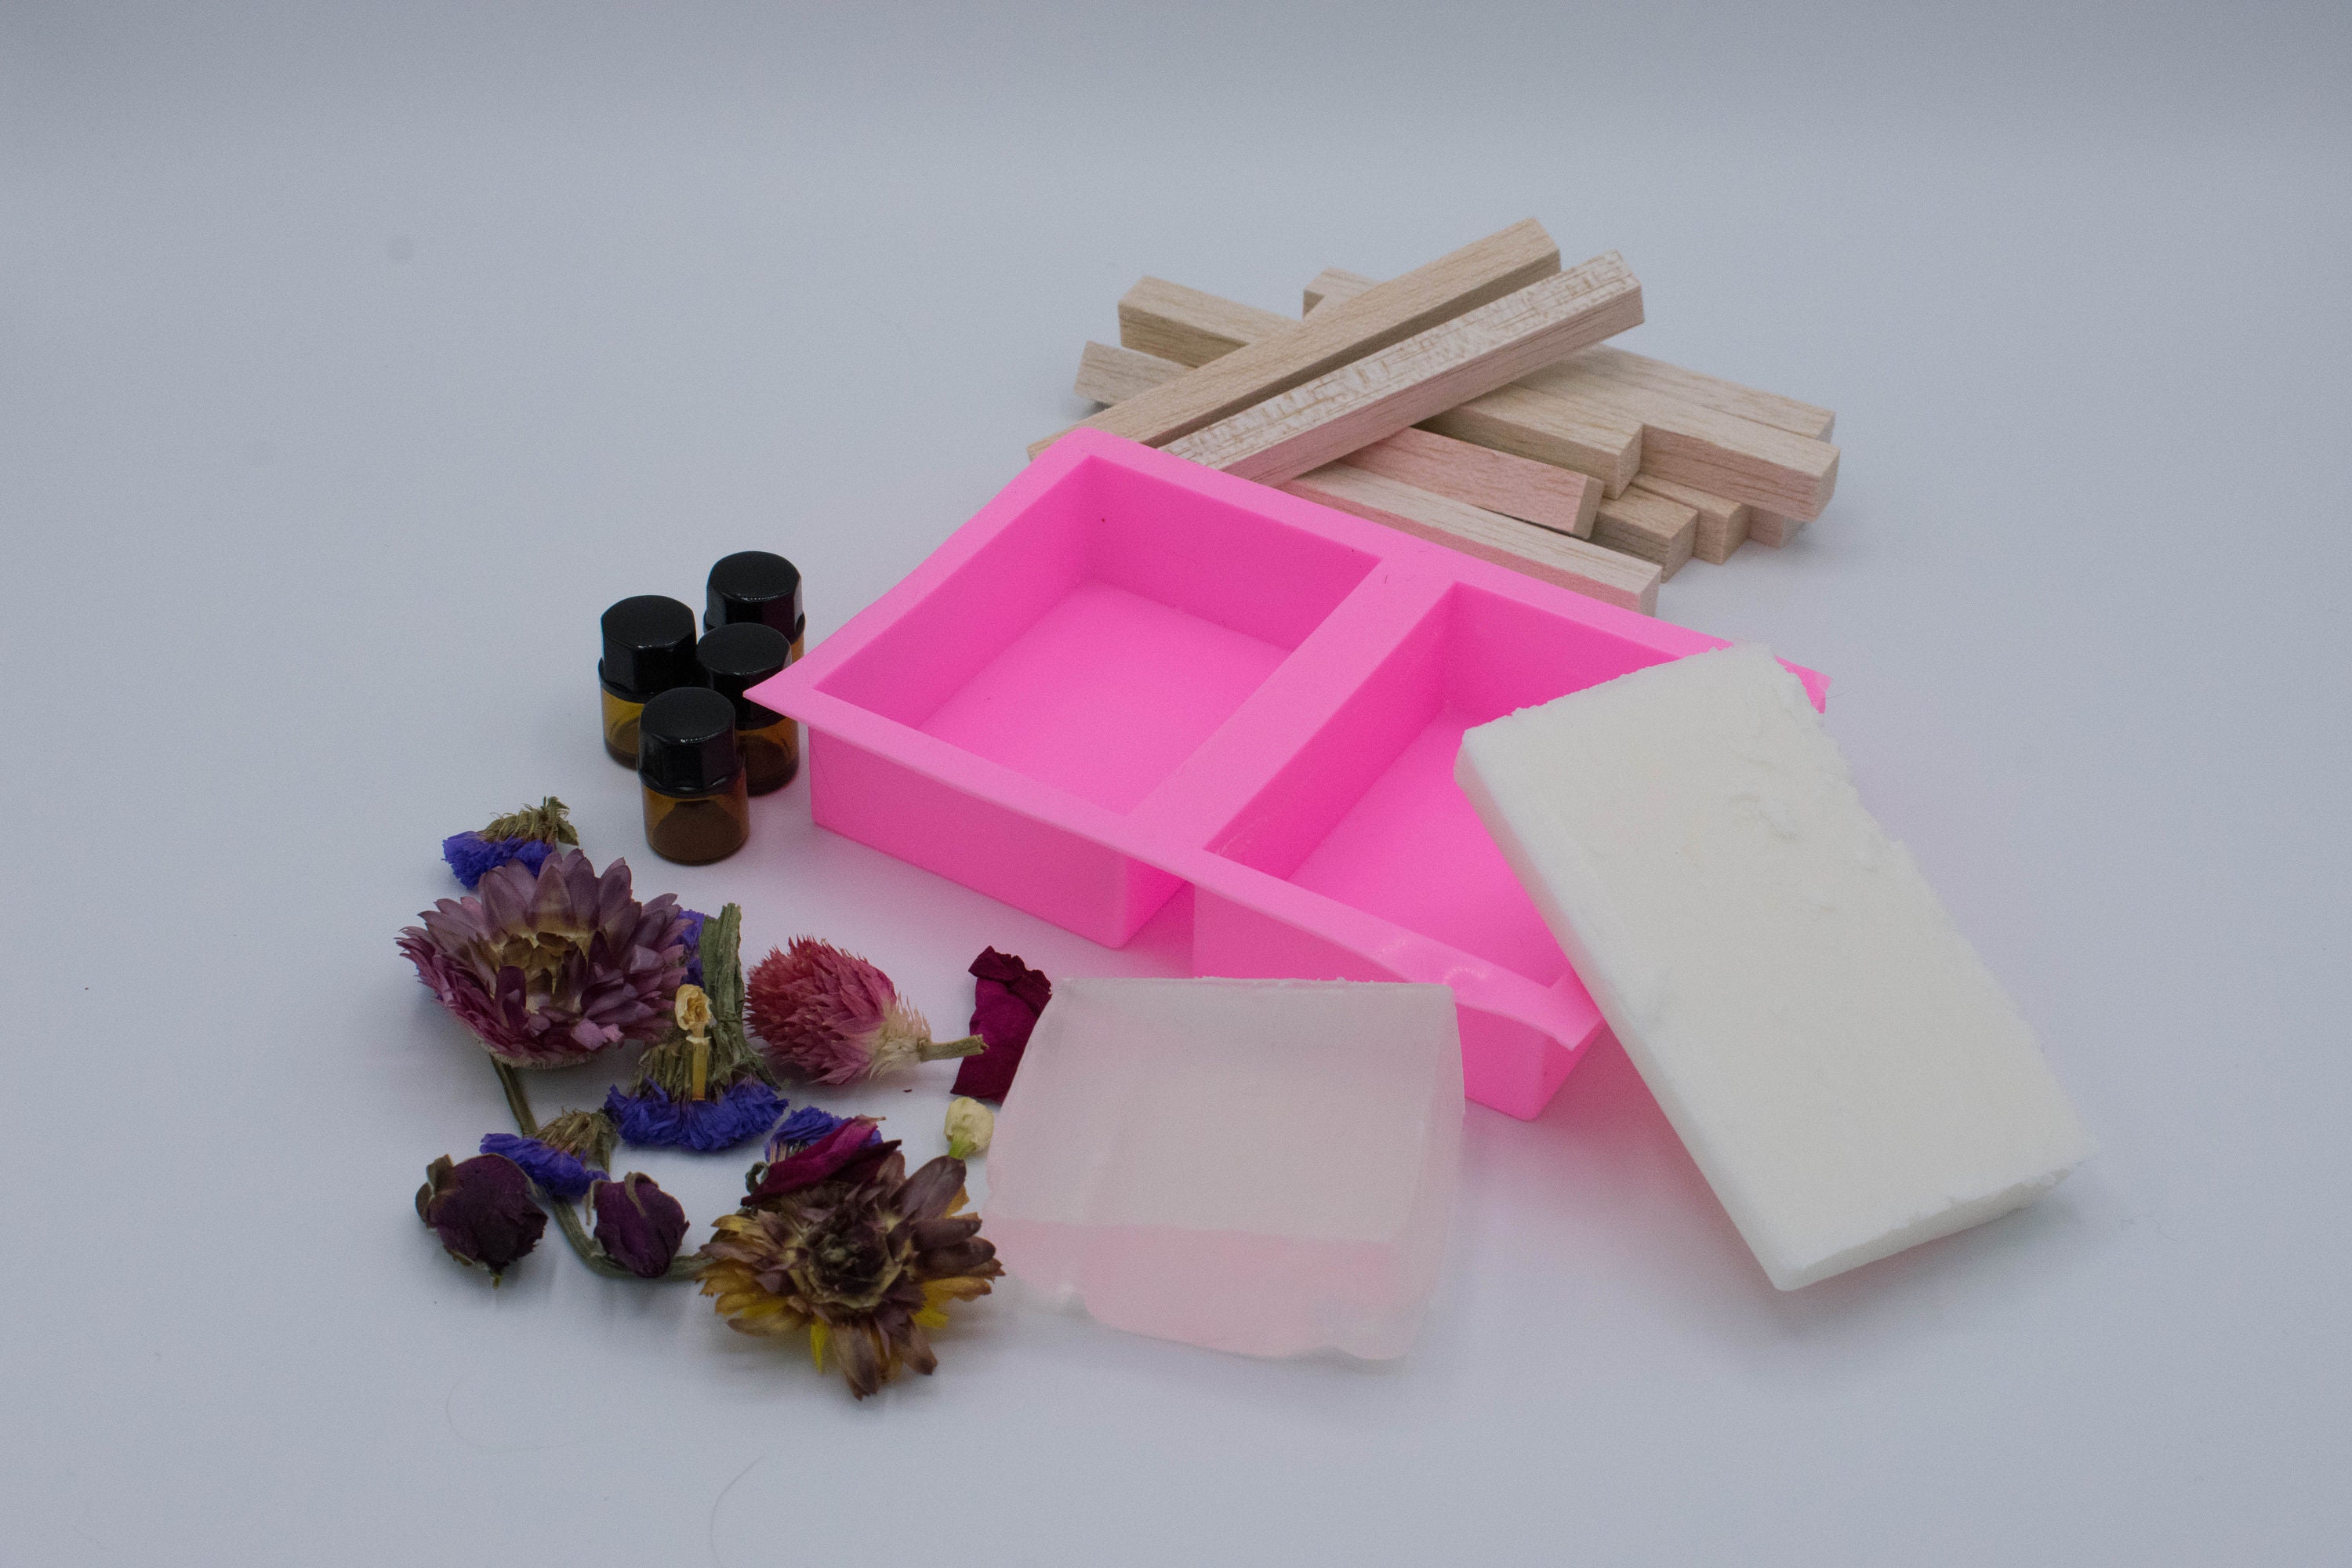 Primal Elements SMKITHF Hearts & Flowers Soap Making Kit